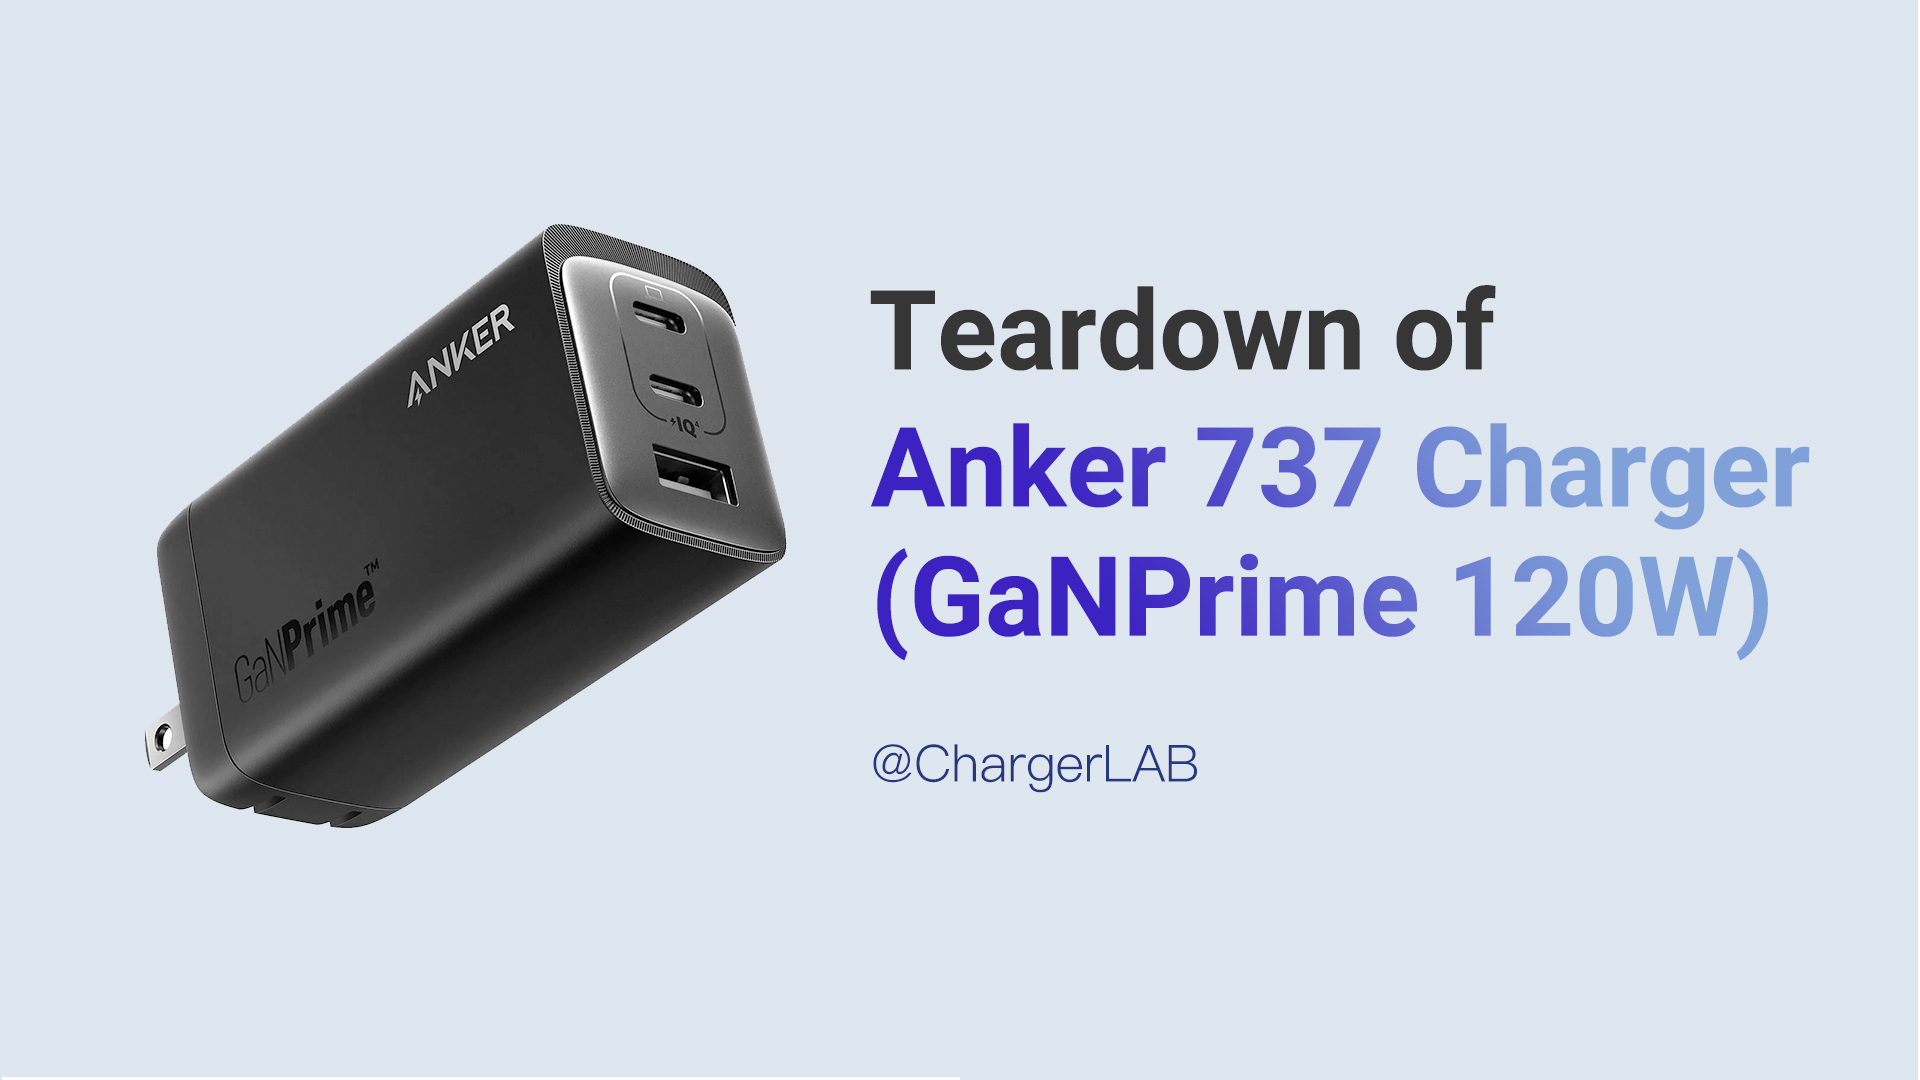  Anker USB C Charger, Anker 737 Charger GaNPrime 120W